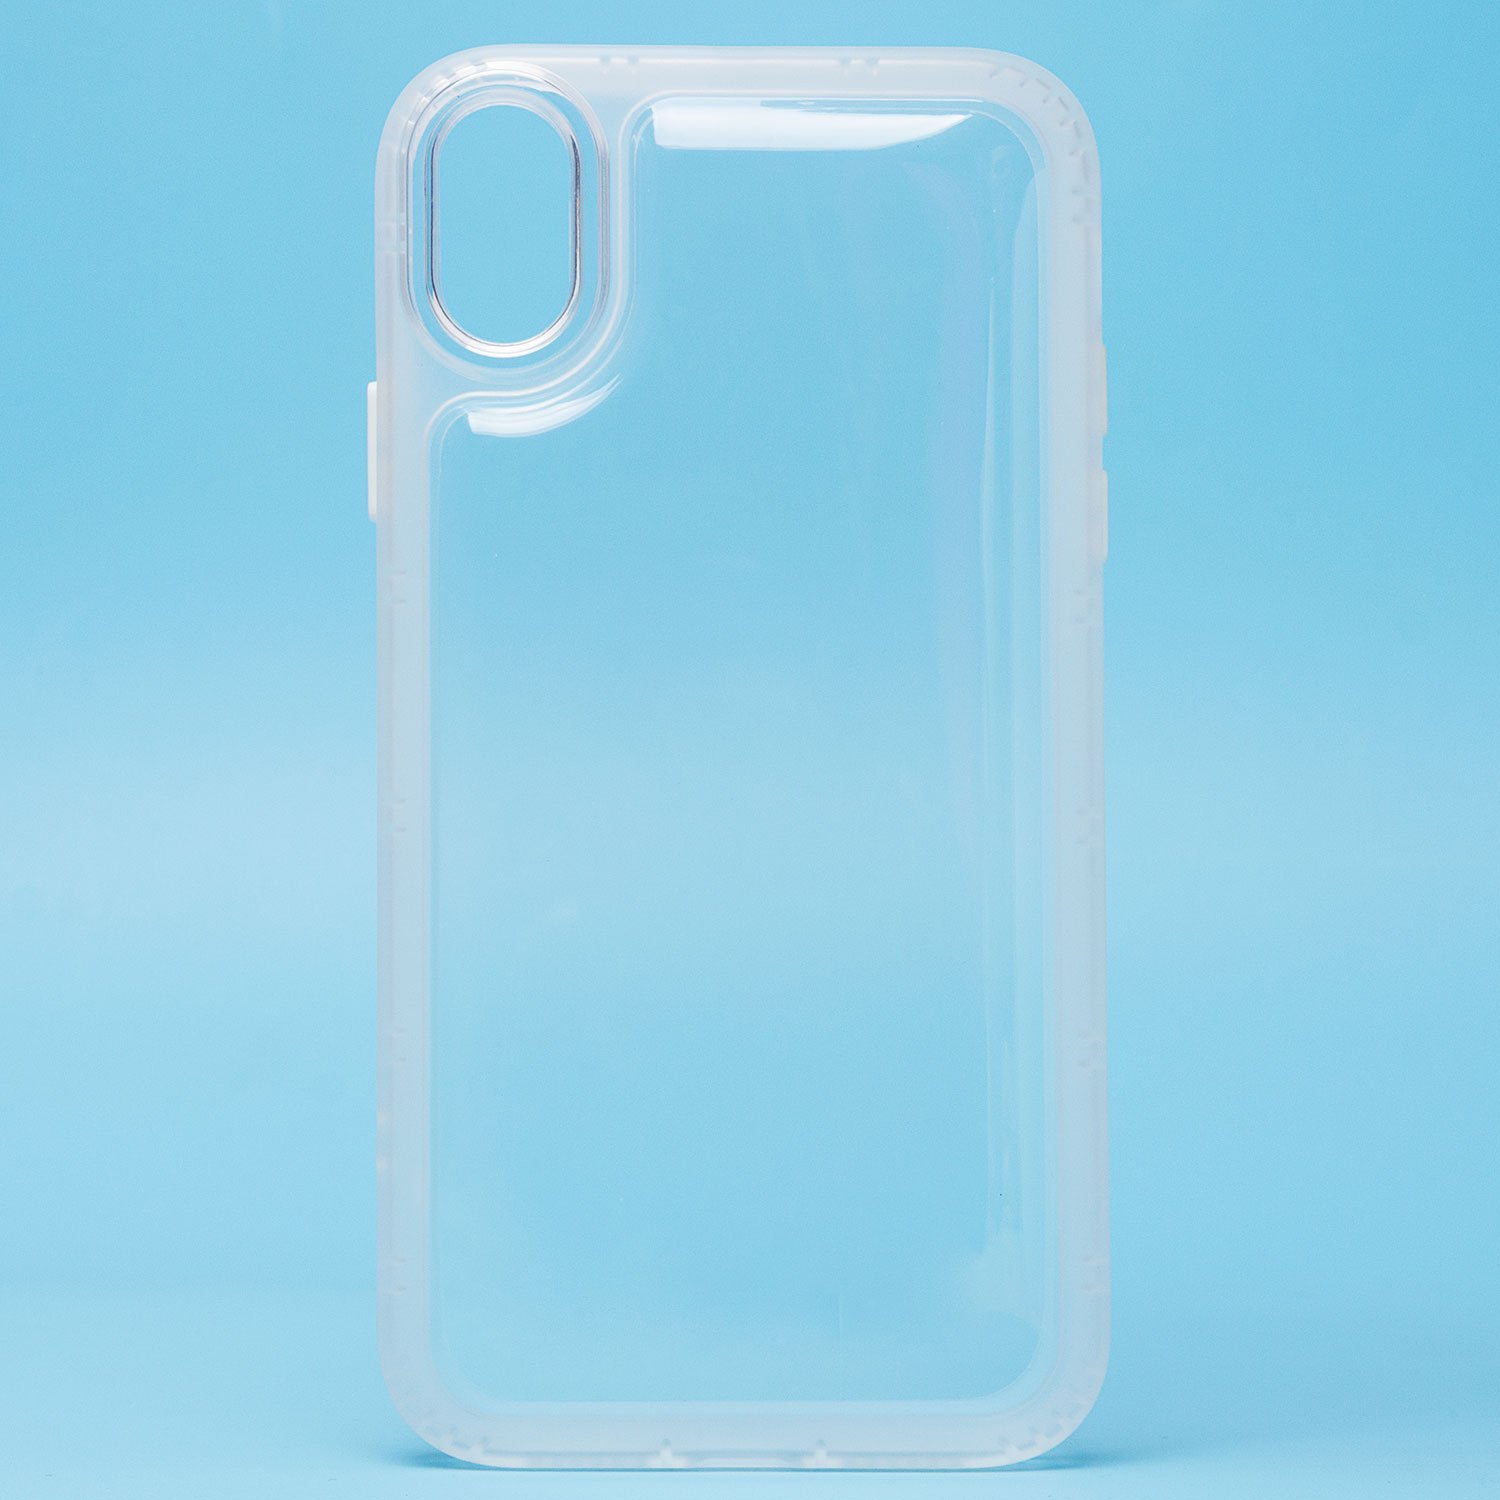 Чехол-накладка для смартфона Apple iPhone XR, силикон, белый/прозрачный